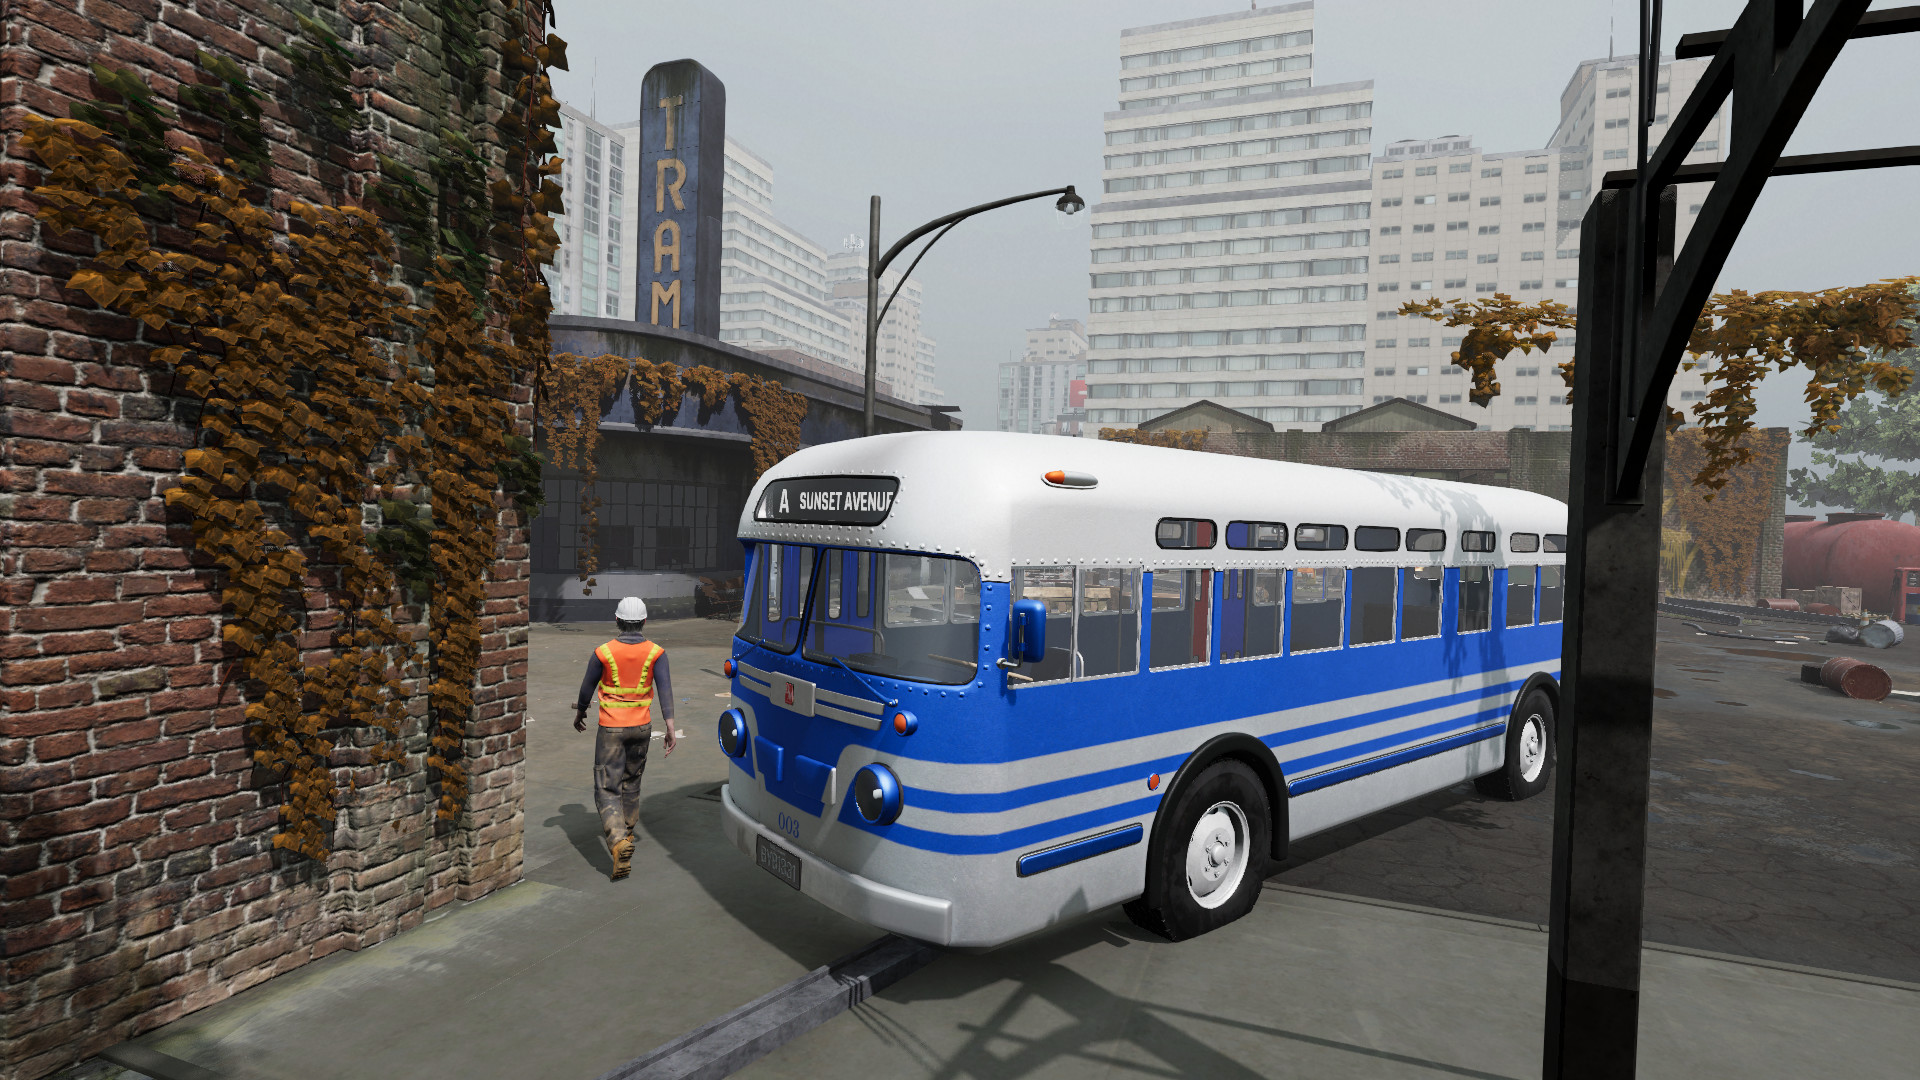 Public Transport Simulator on Steam